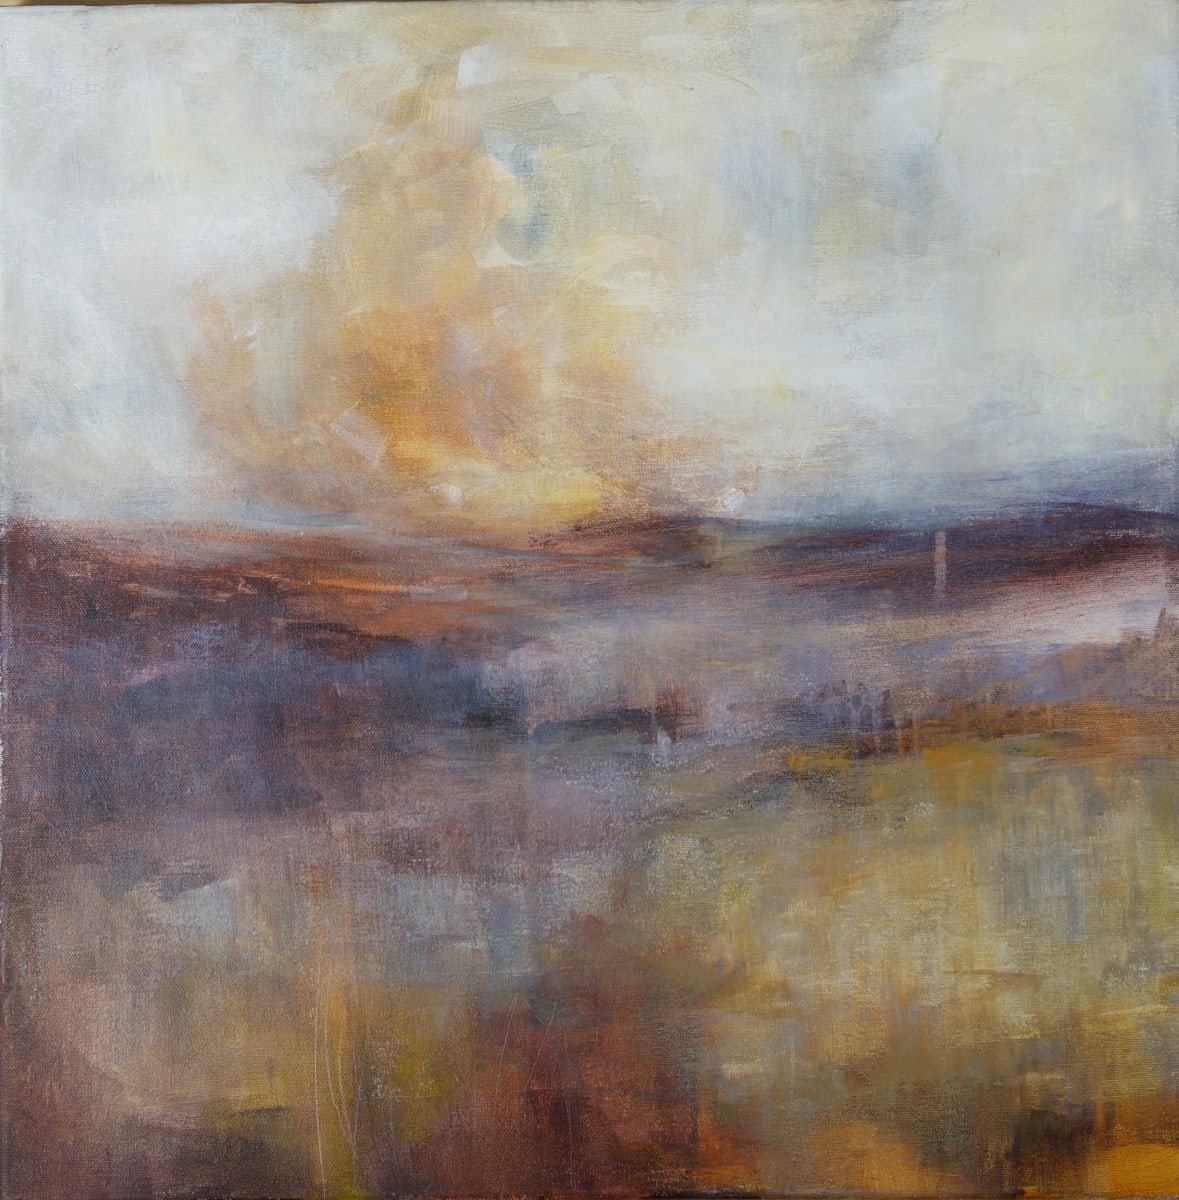 Awakening by Jo York  Image: Awakening: colours and atmosphere of a sunny moorland